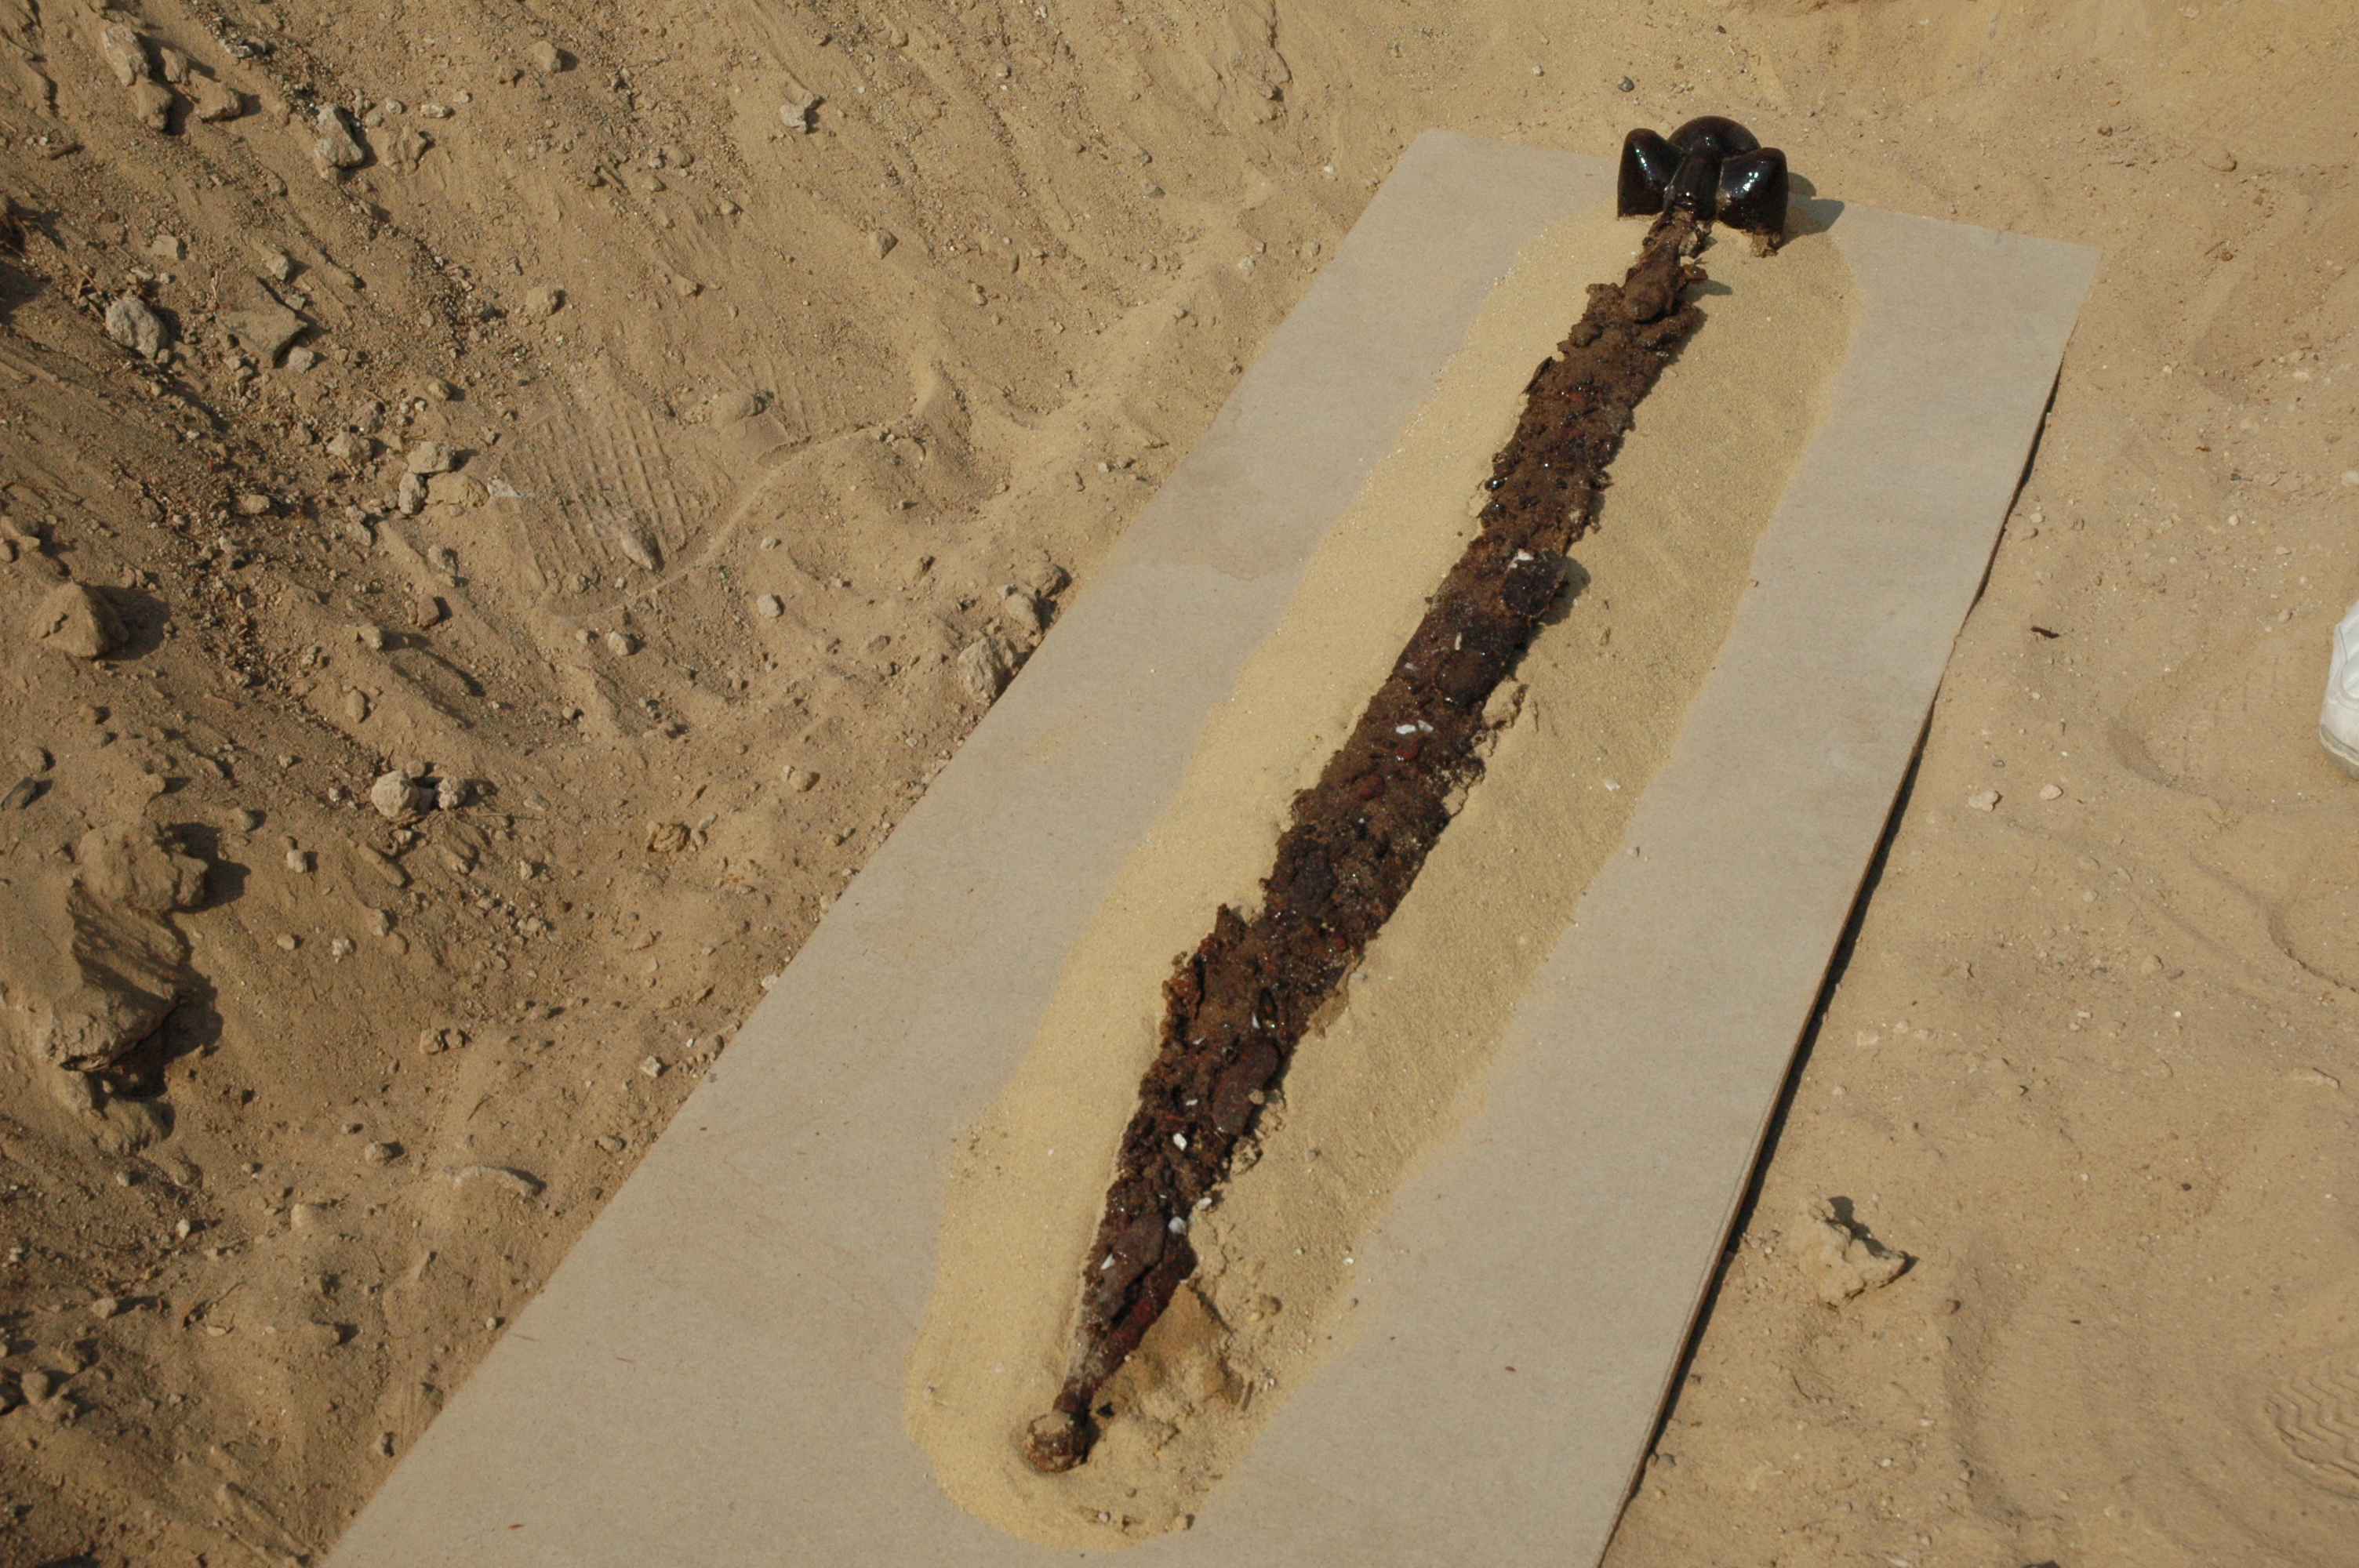 New “Roman” Sword Discovered